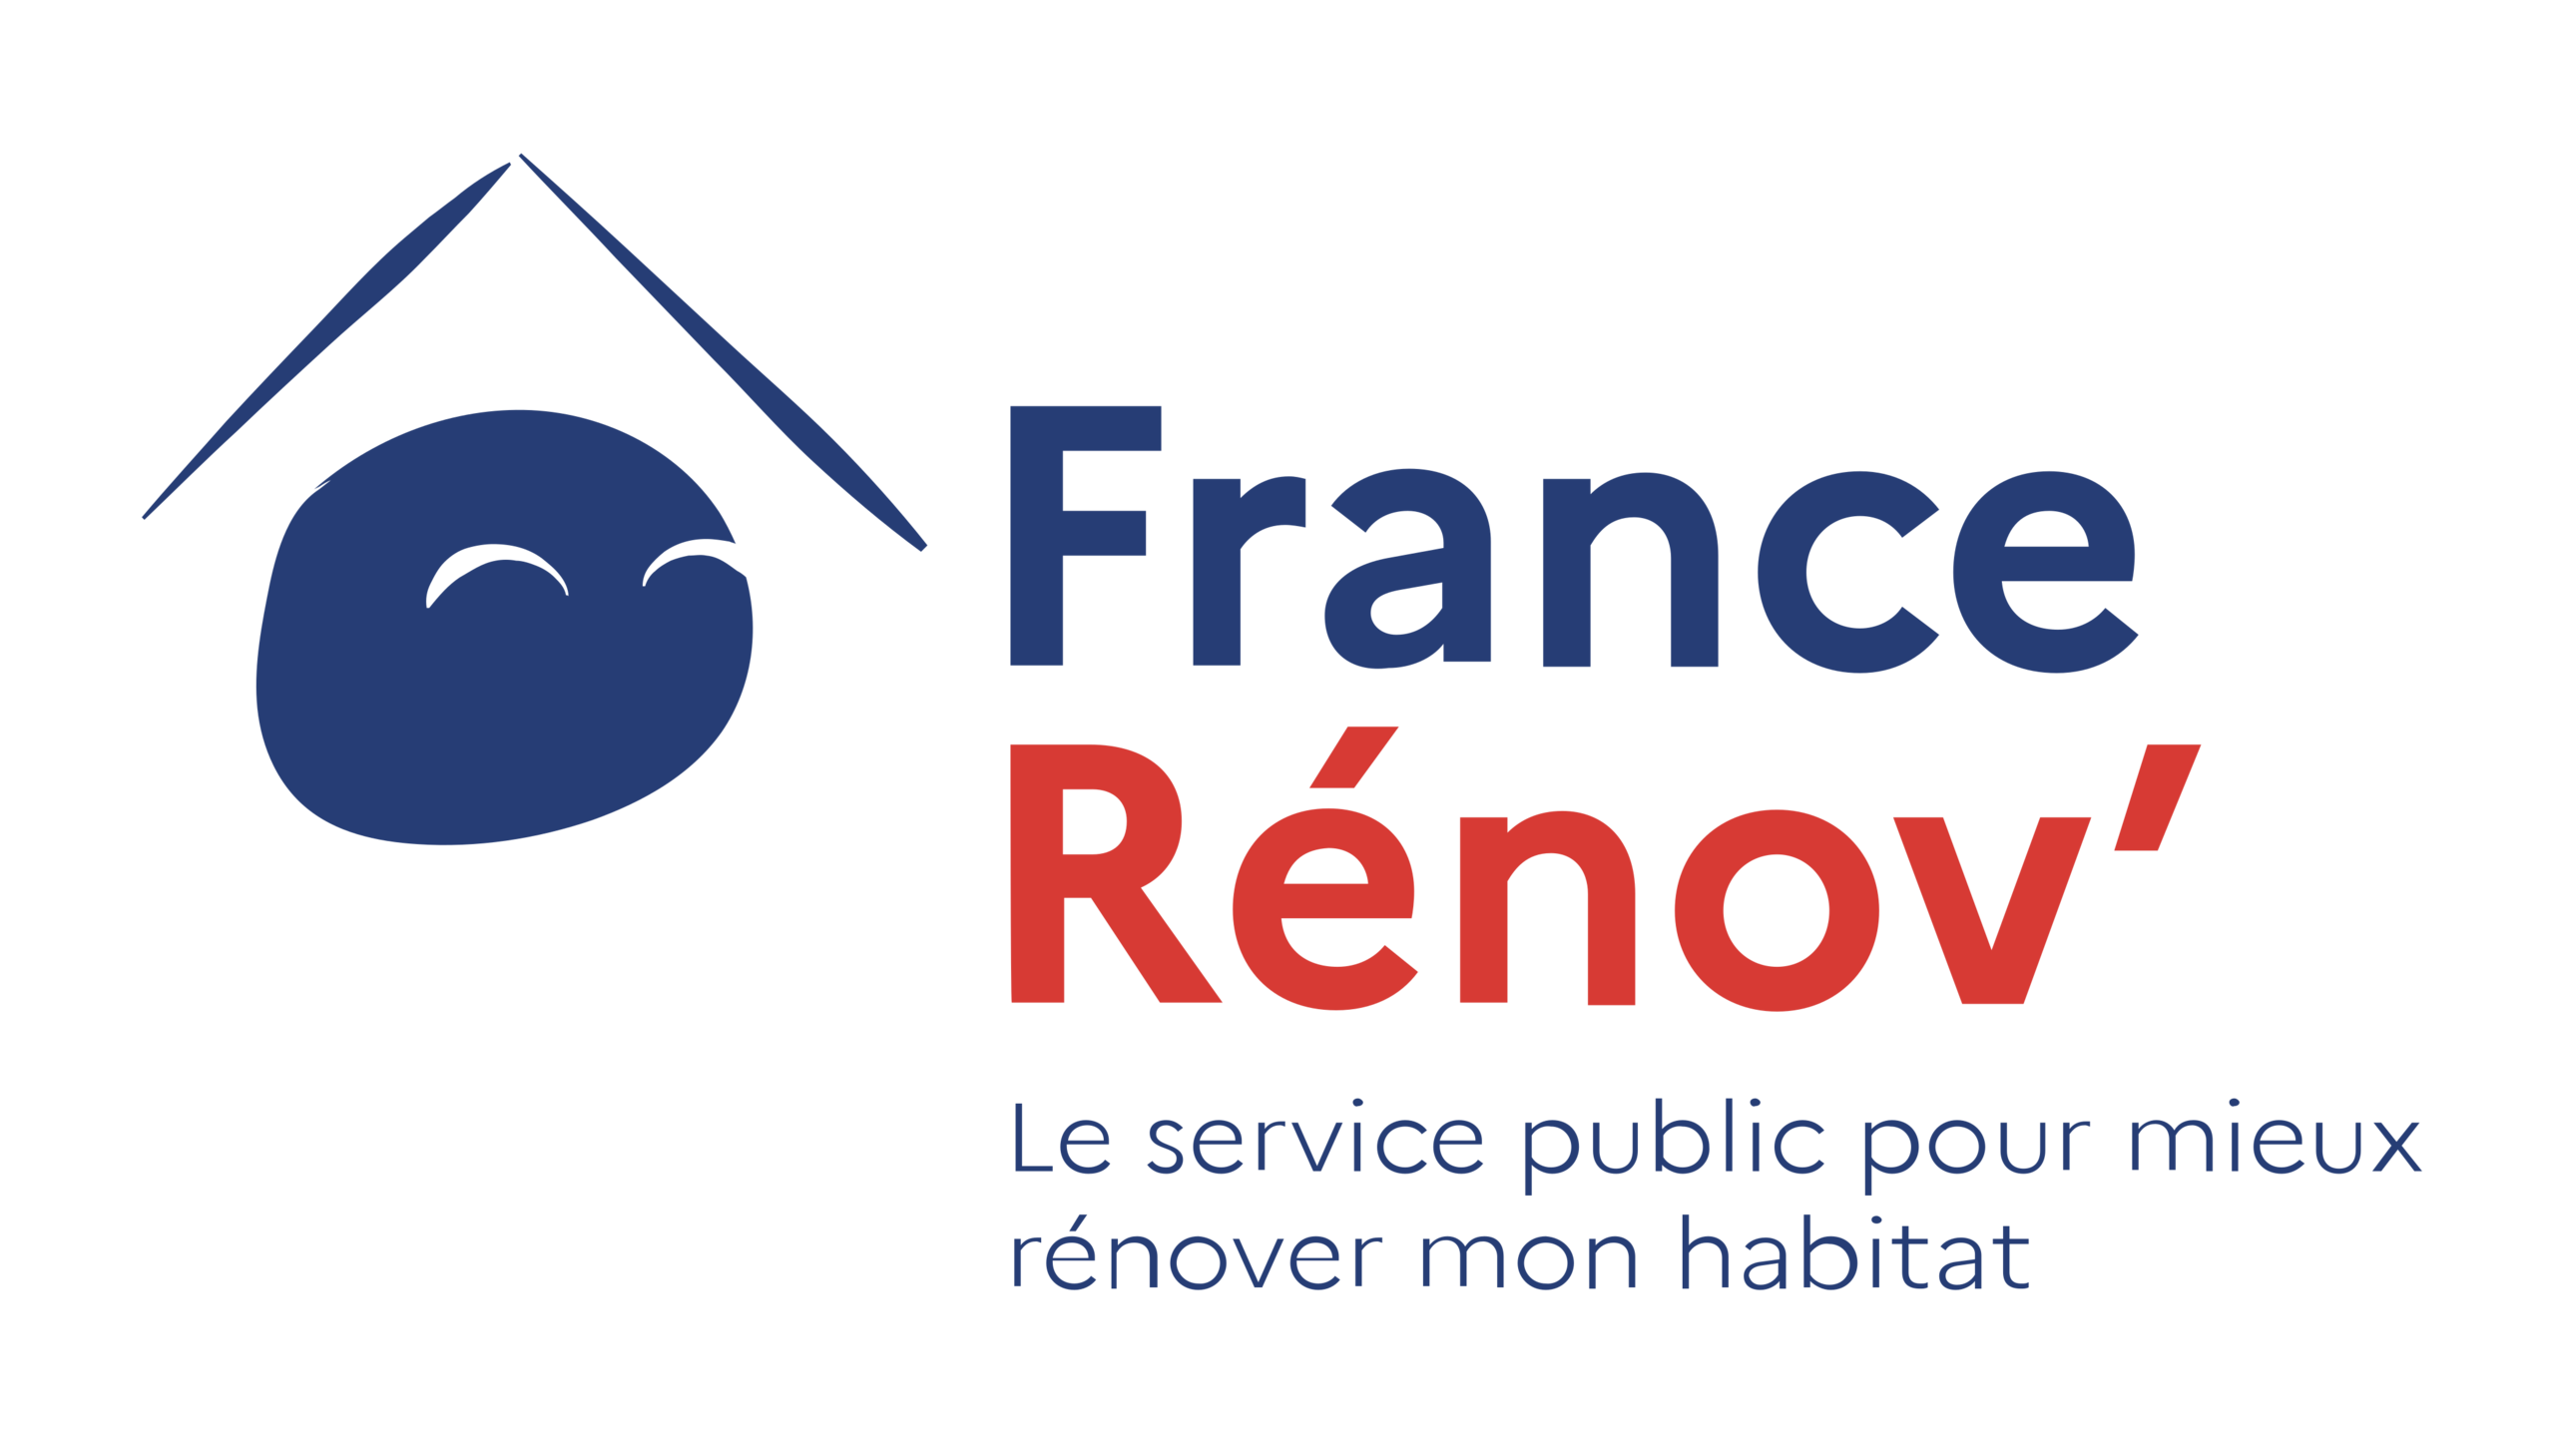 France-renov_Logo.png